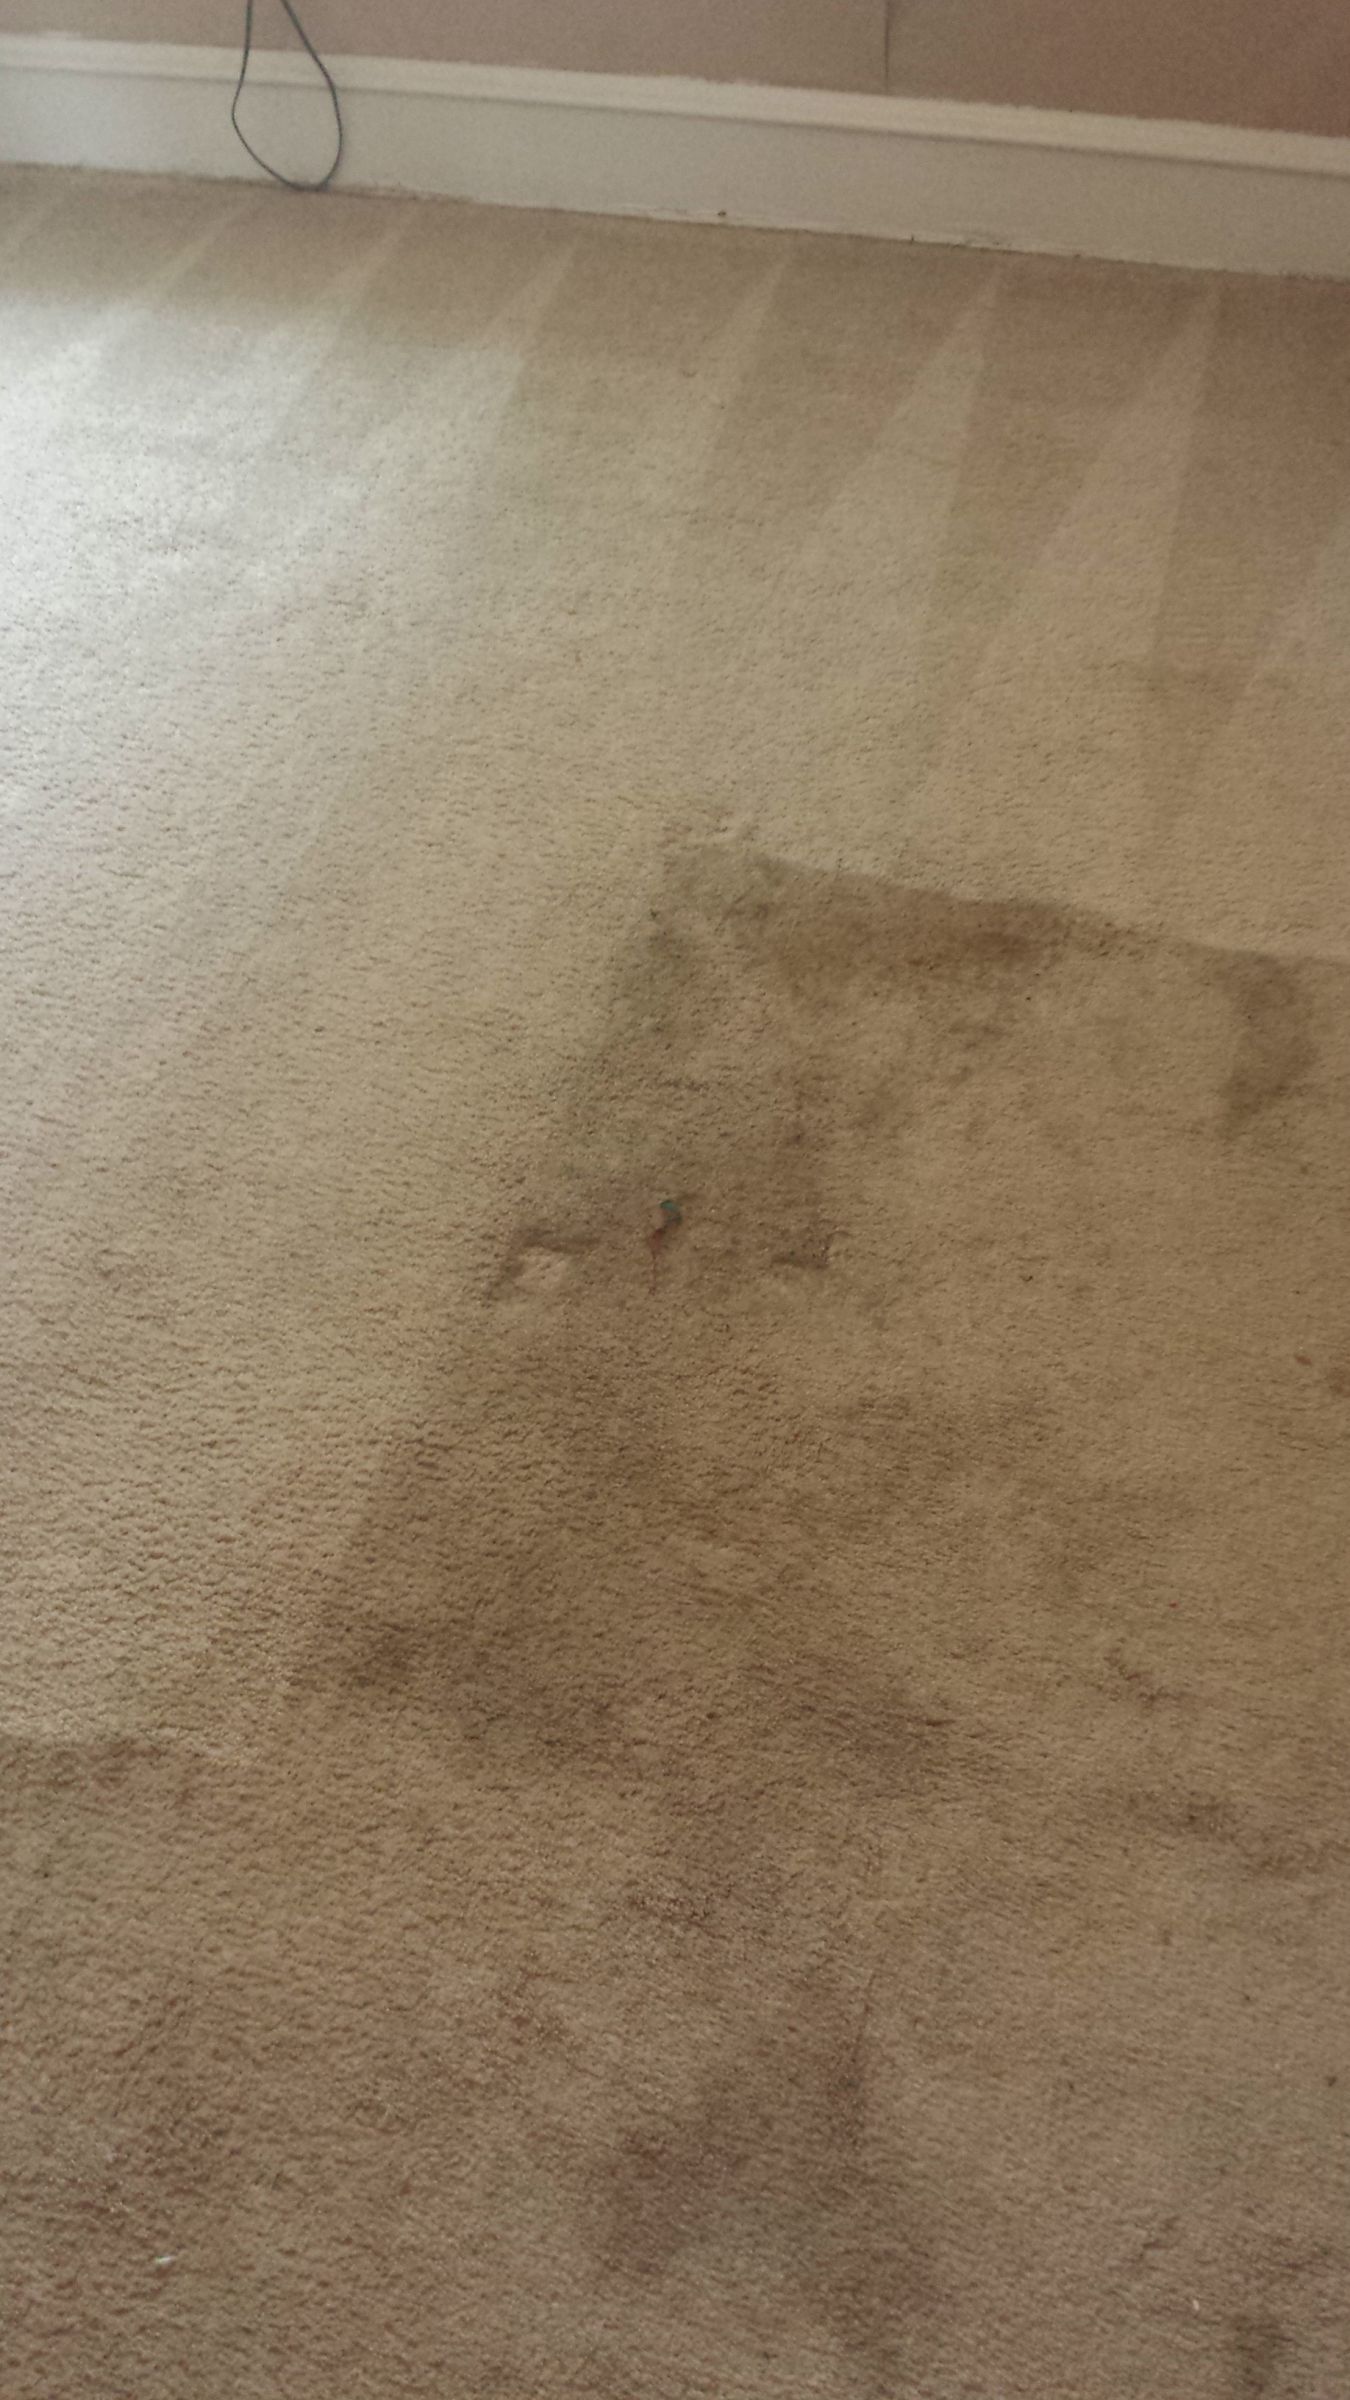 Mullica Hill Carpet Cleaner. Clean Stains, Smells & Dander